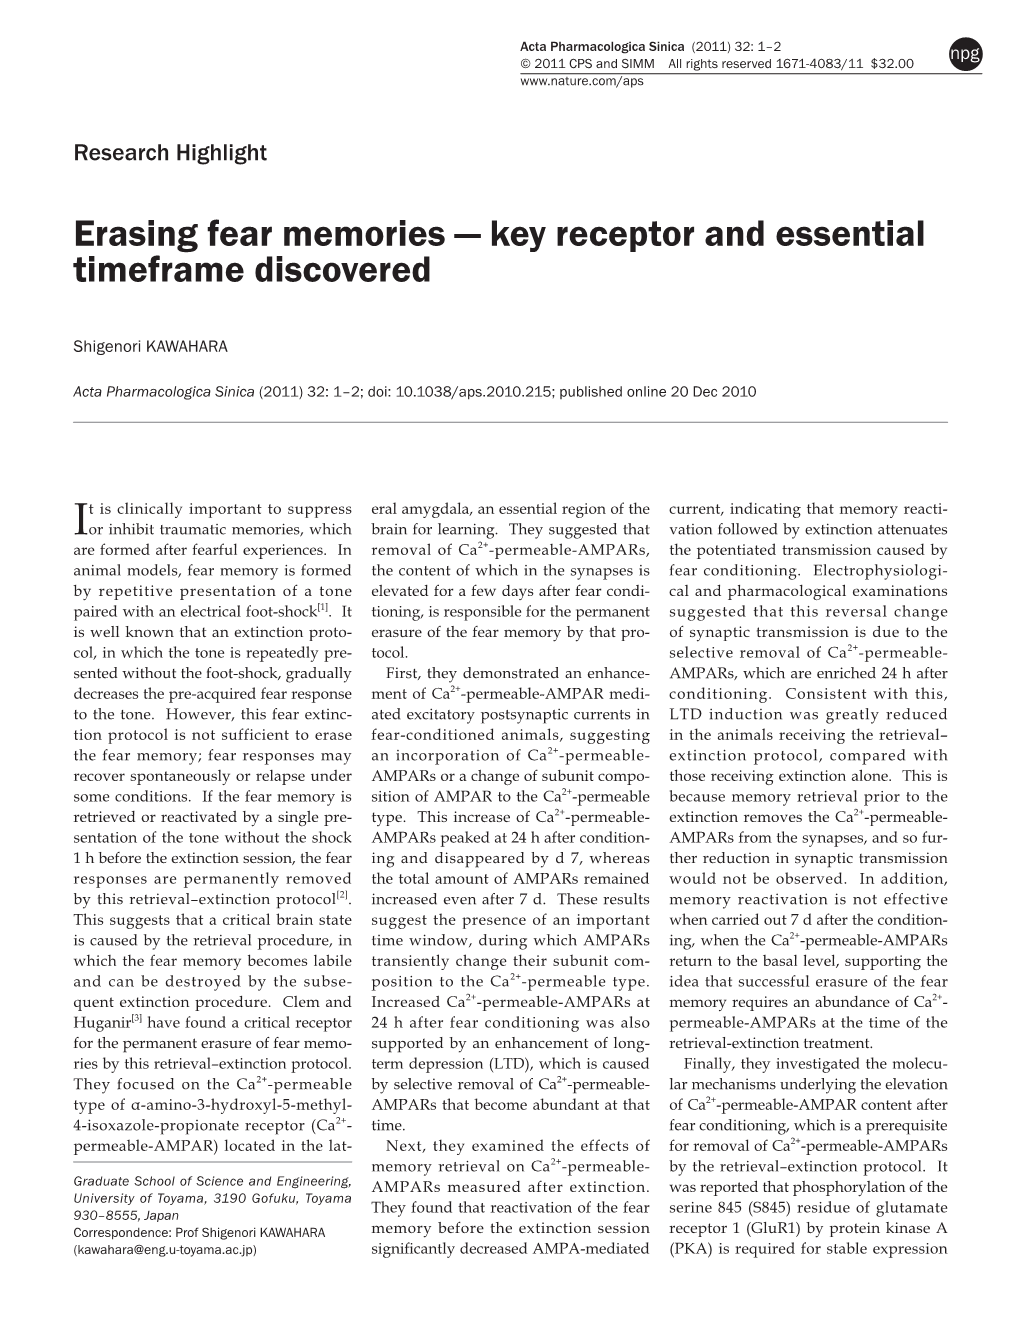 Erasing Fear Memories — Key Receptor and Essential Timeframe Discovered